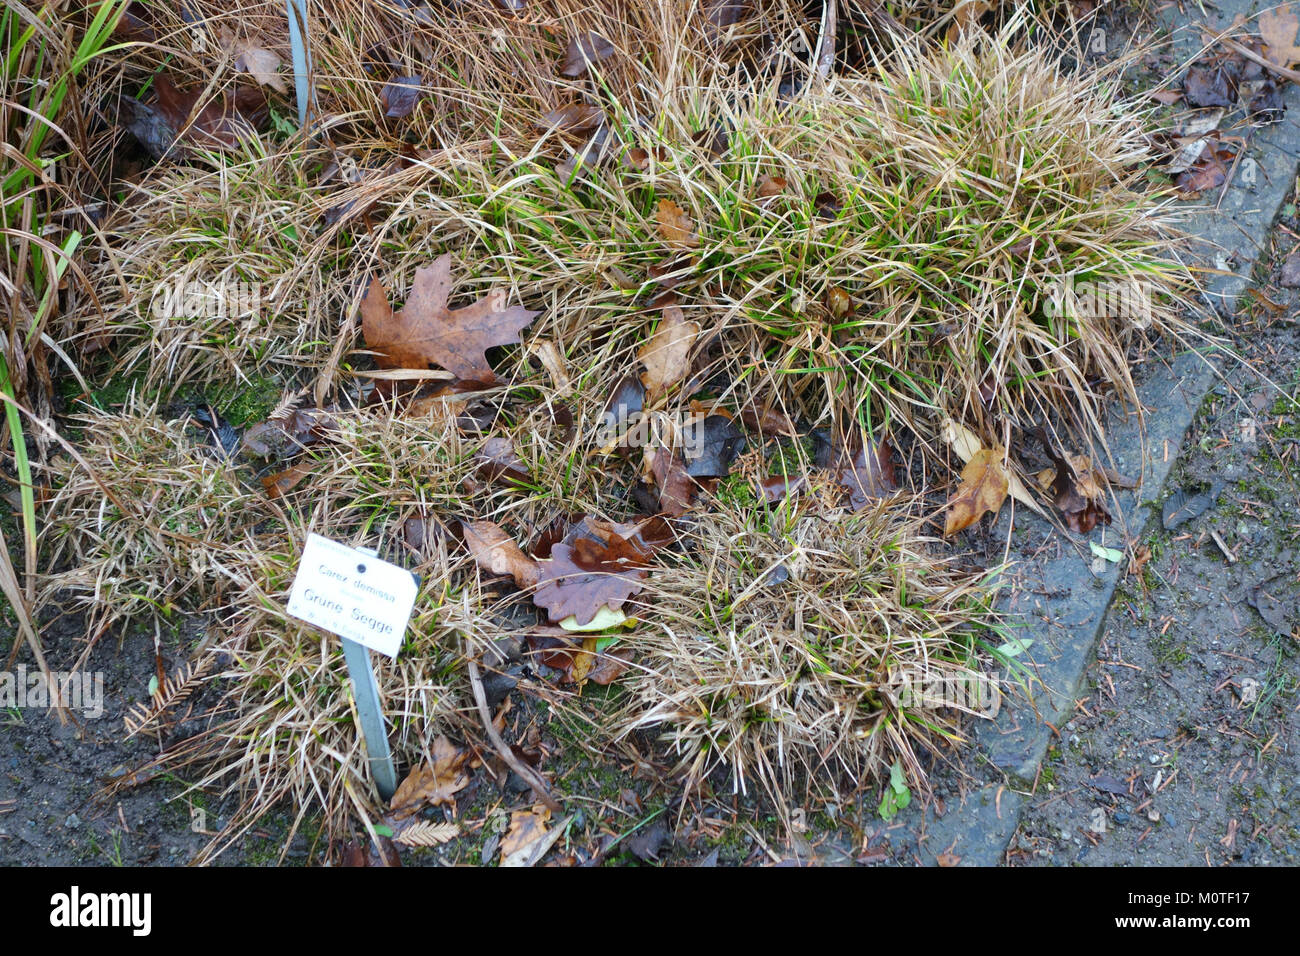 Carex viridula subsp. oedocarpa (Carex demissa) - Botanischer Garten, Dresden, Germany - DSC08756 Stock Photo